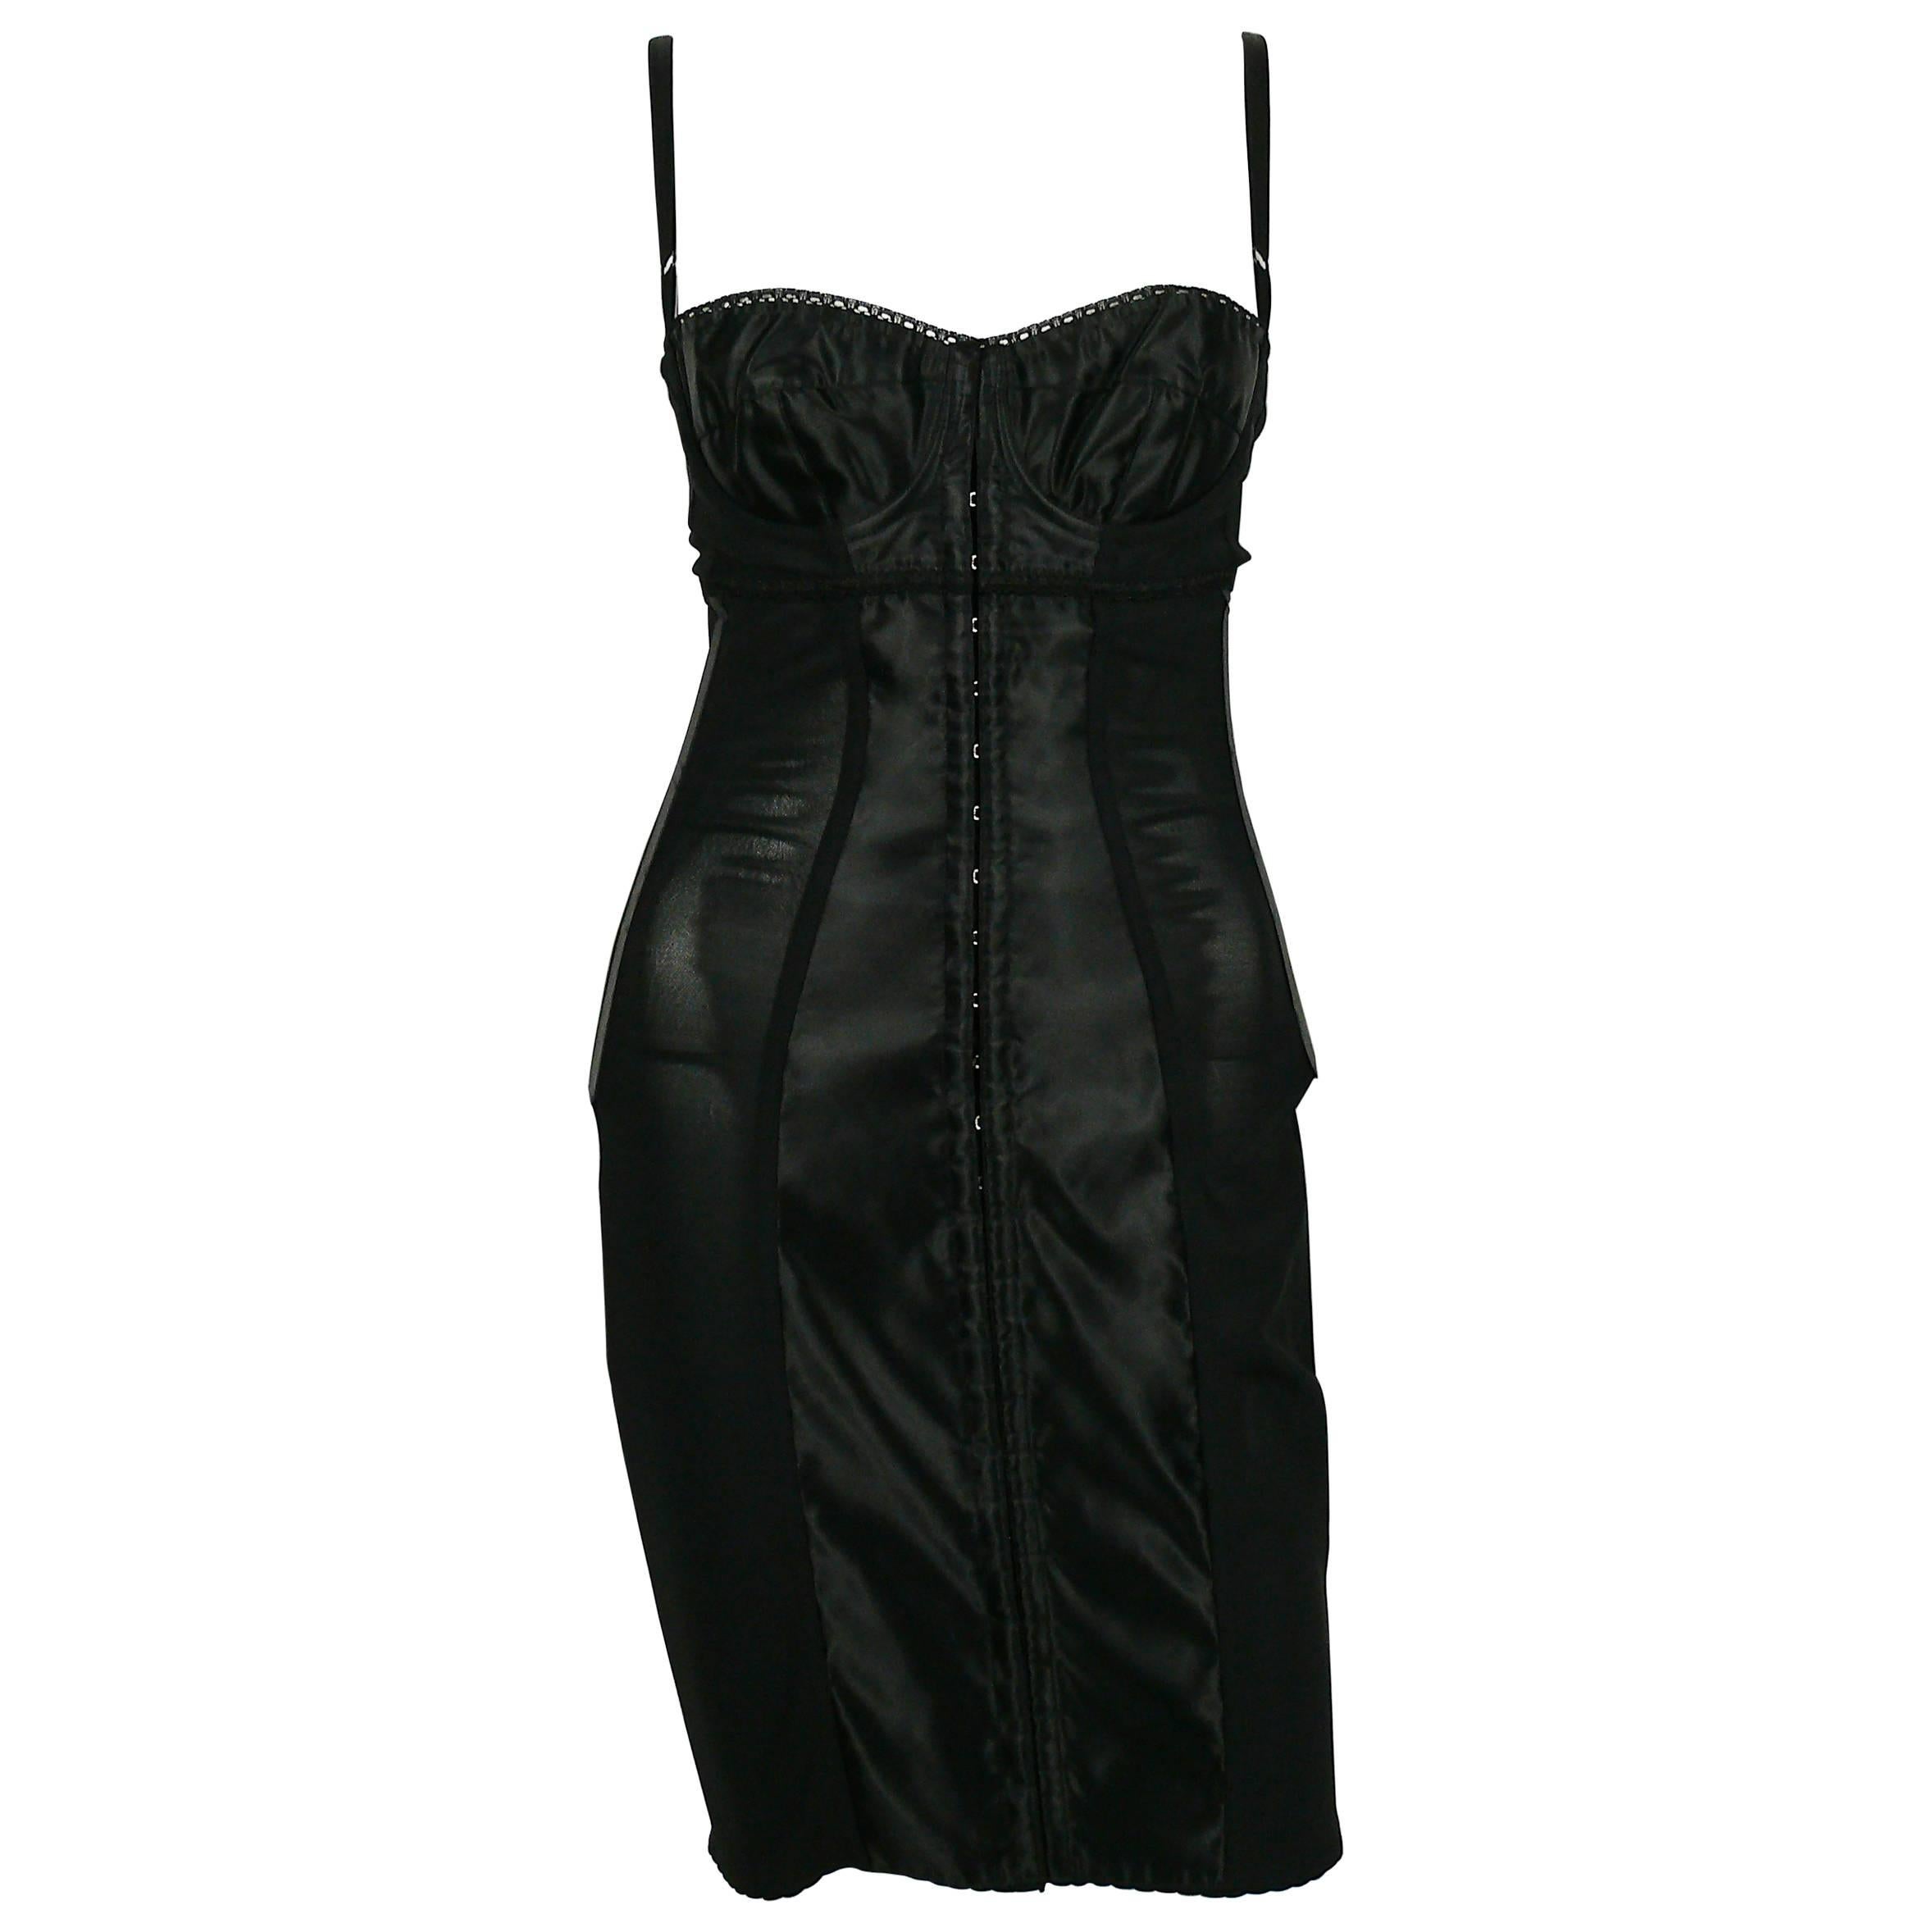 Dolce and Gabbana Black Lingerie Corset Bustier Dress